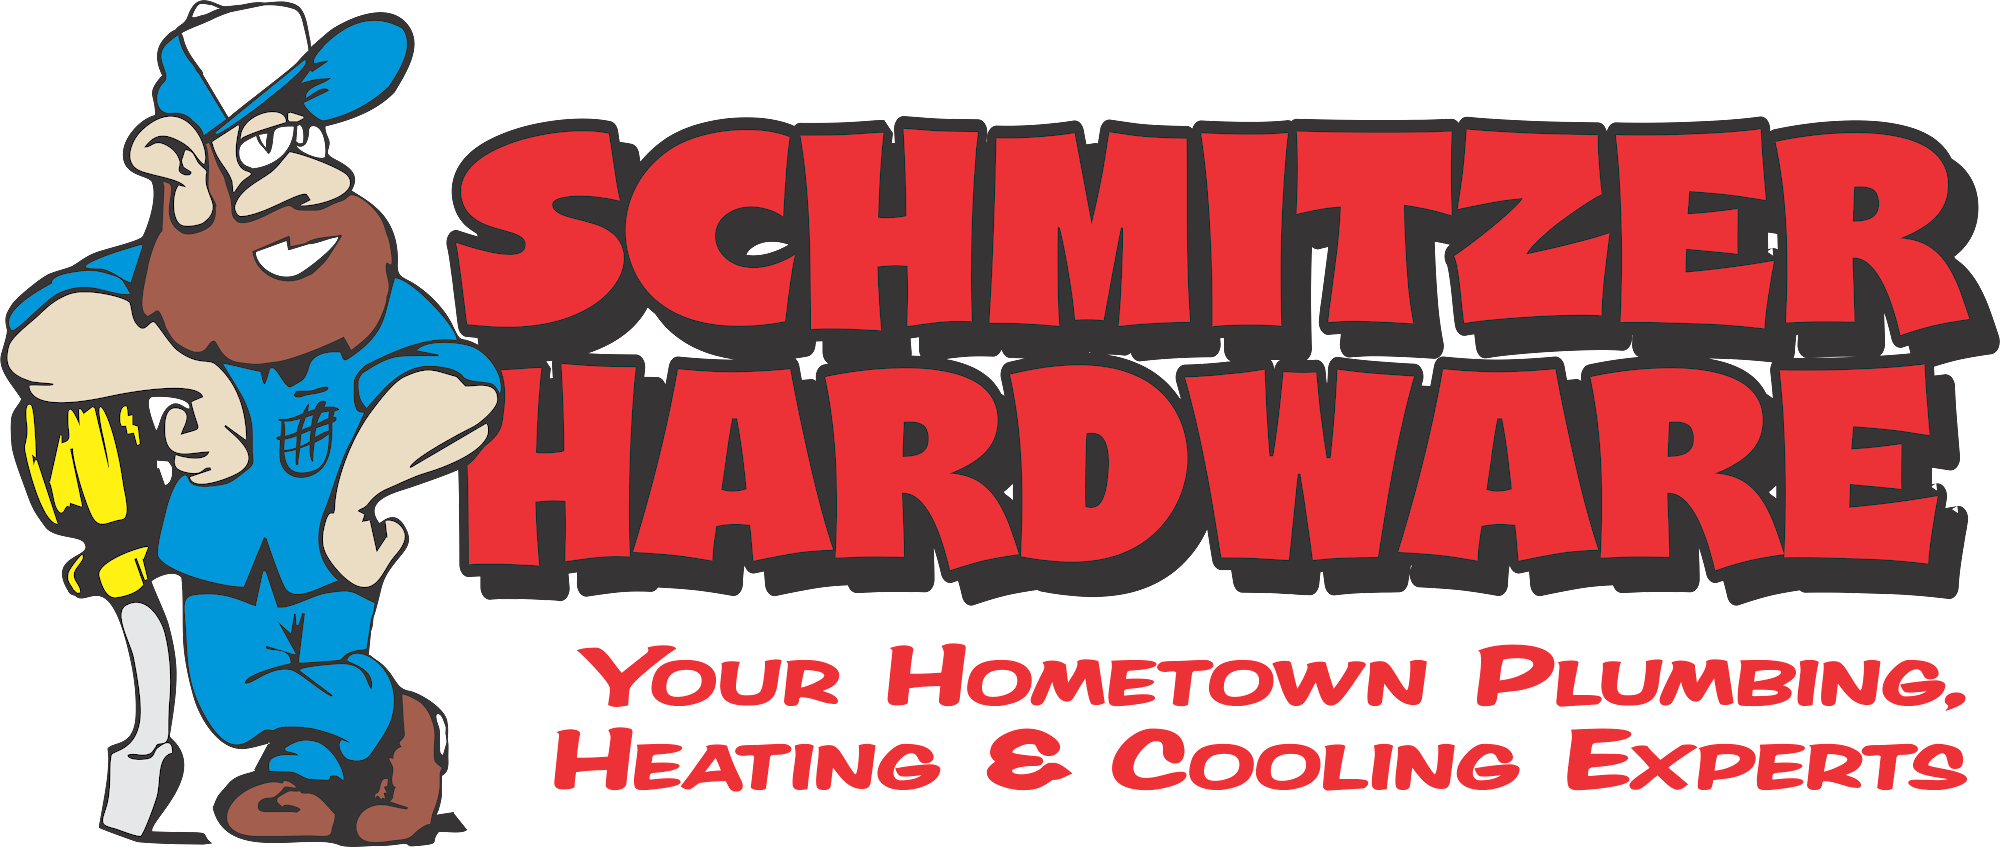 Schmitzer Hardware Plumbing Heating & Cooling